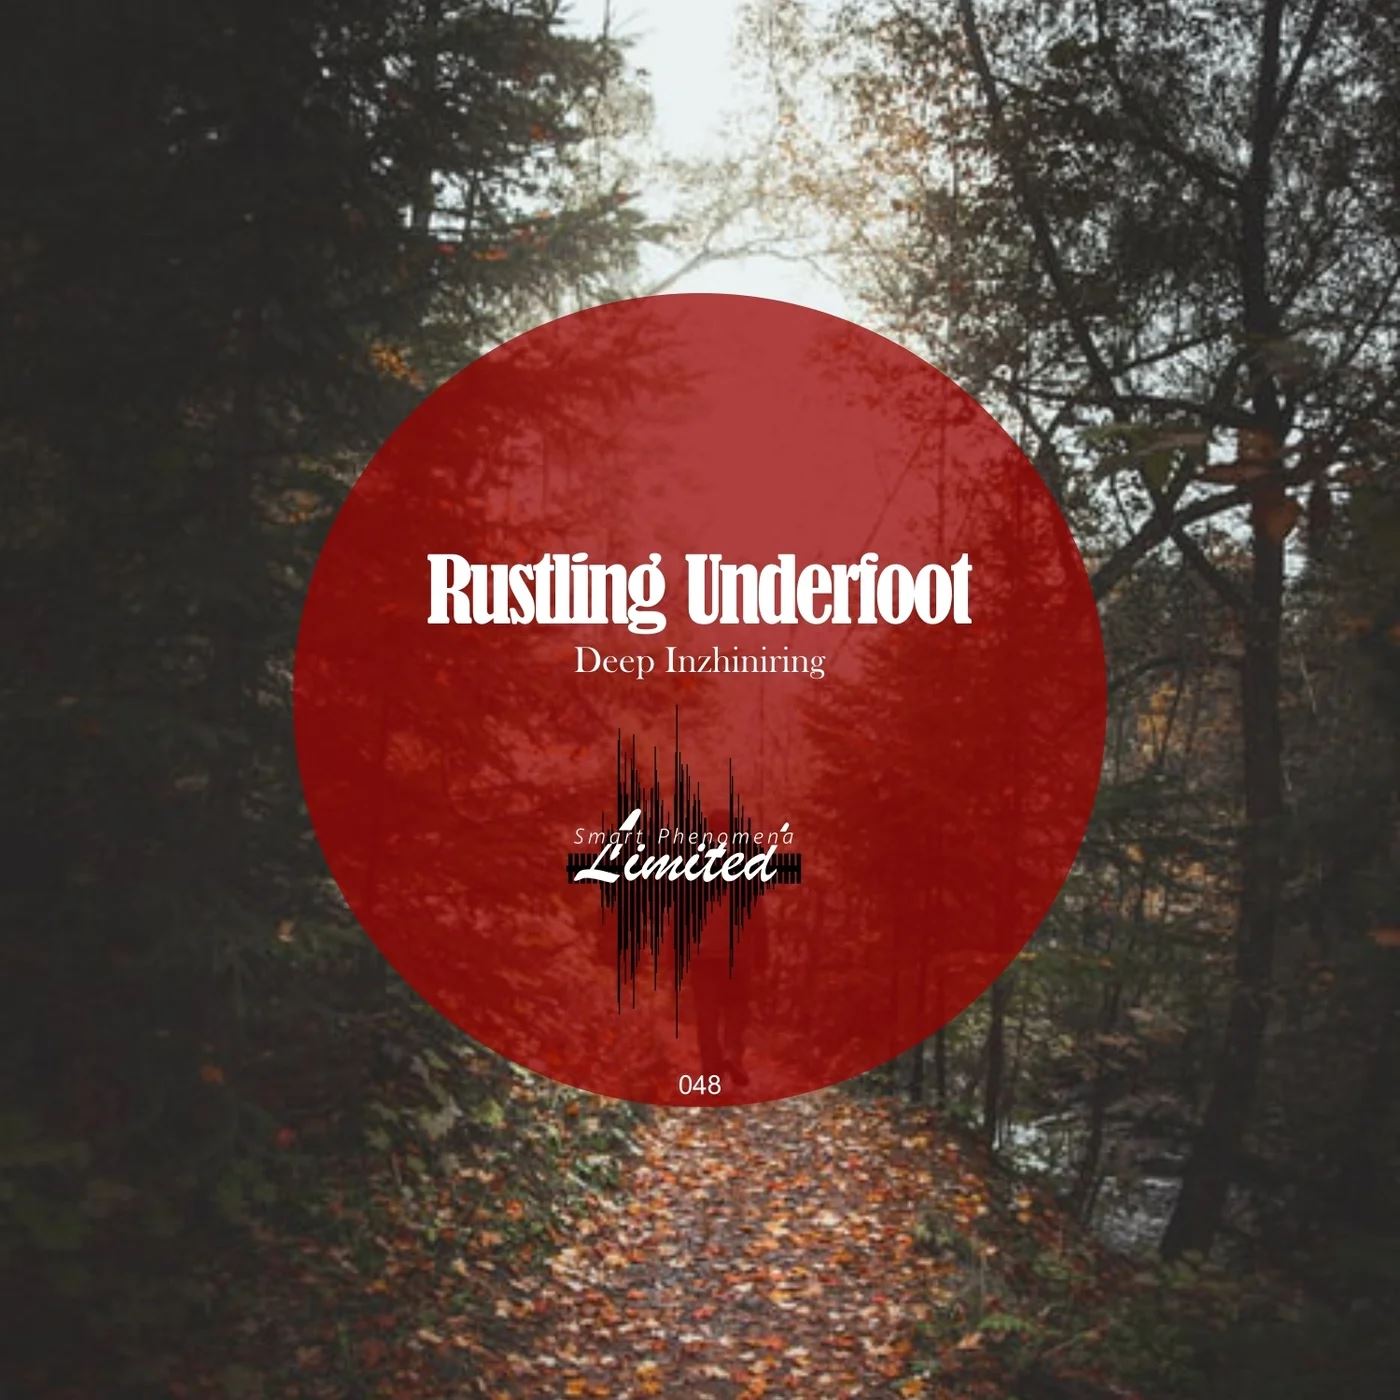 Deep Inzhiniring - Rustling Underfoot [SPL0048]